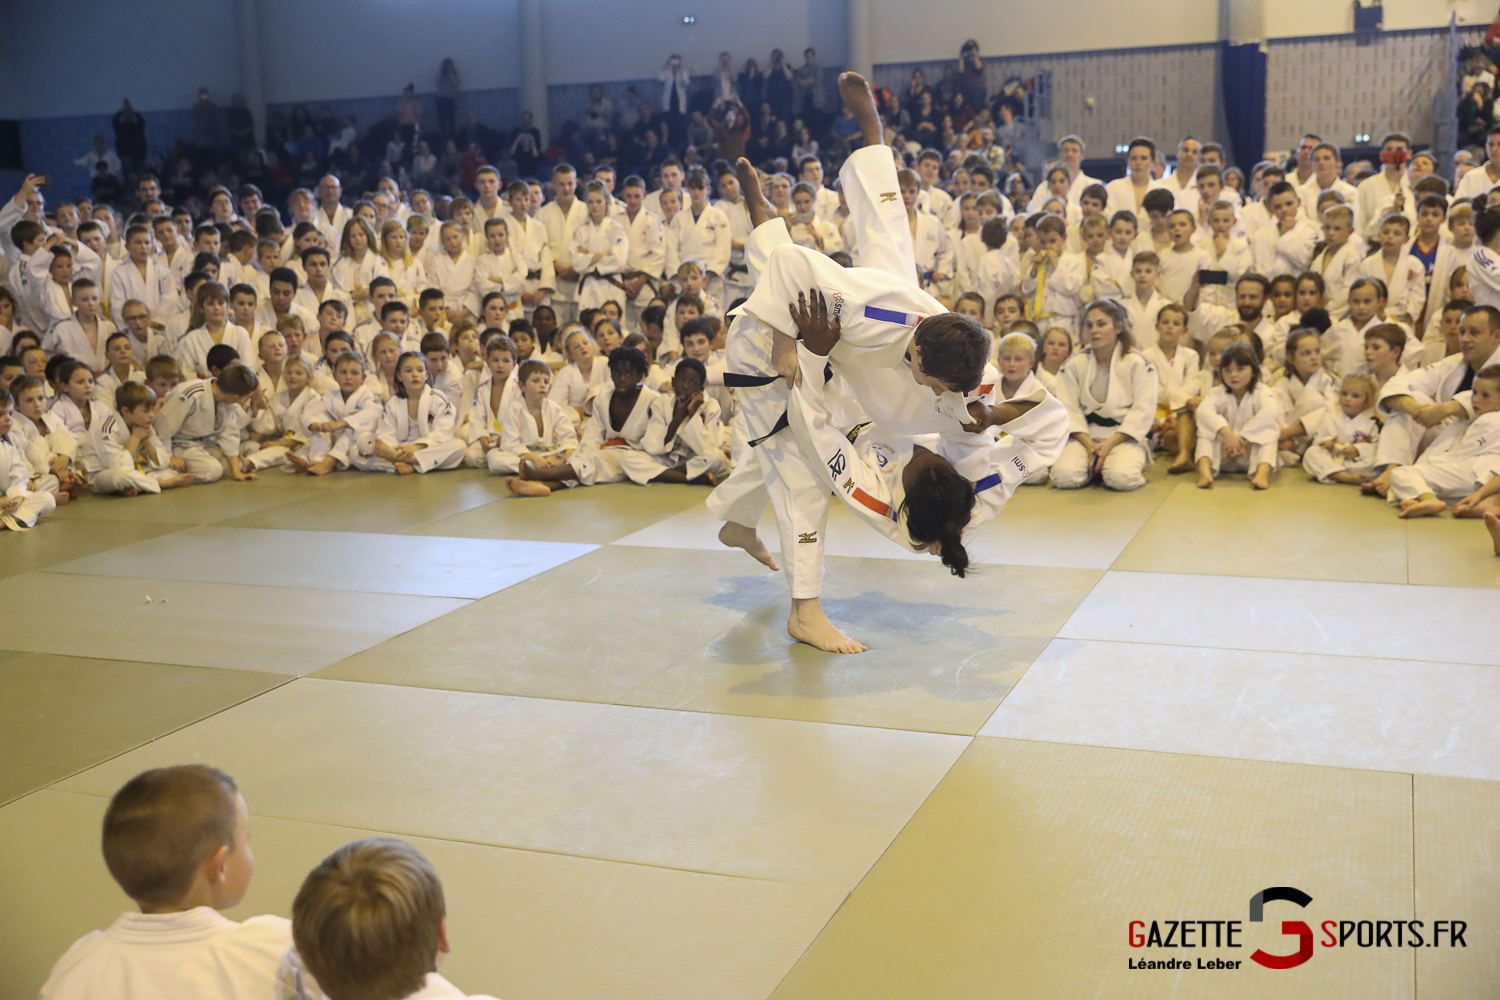 judo les mercredi hall 4 chenes lucie louette 0004 leandre leber gazettesports